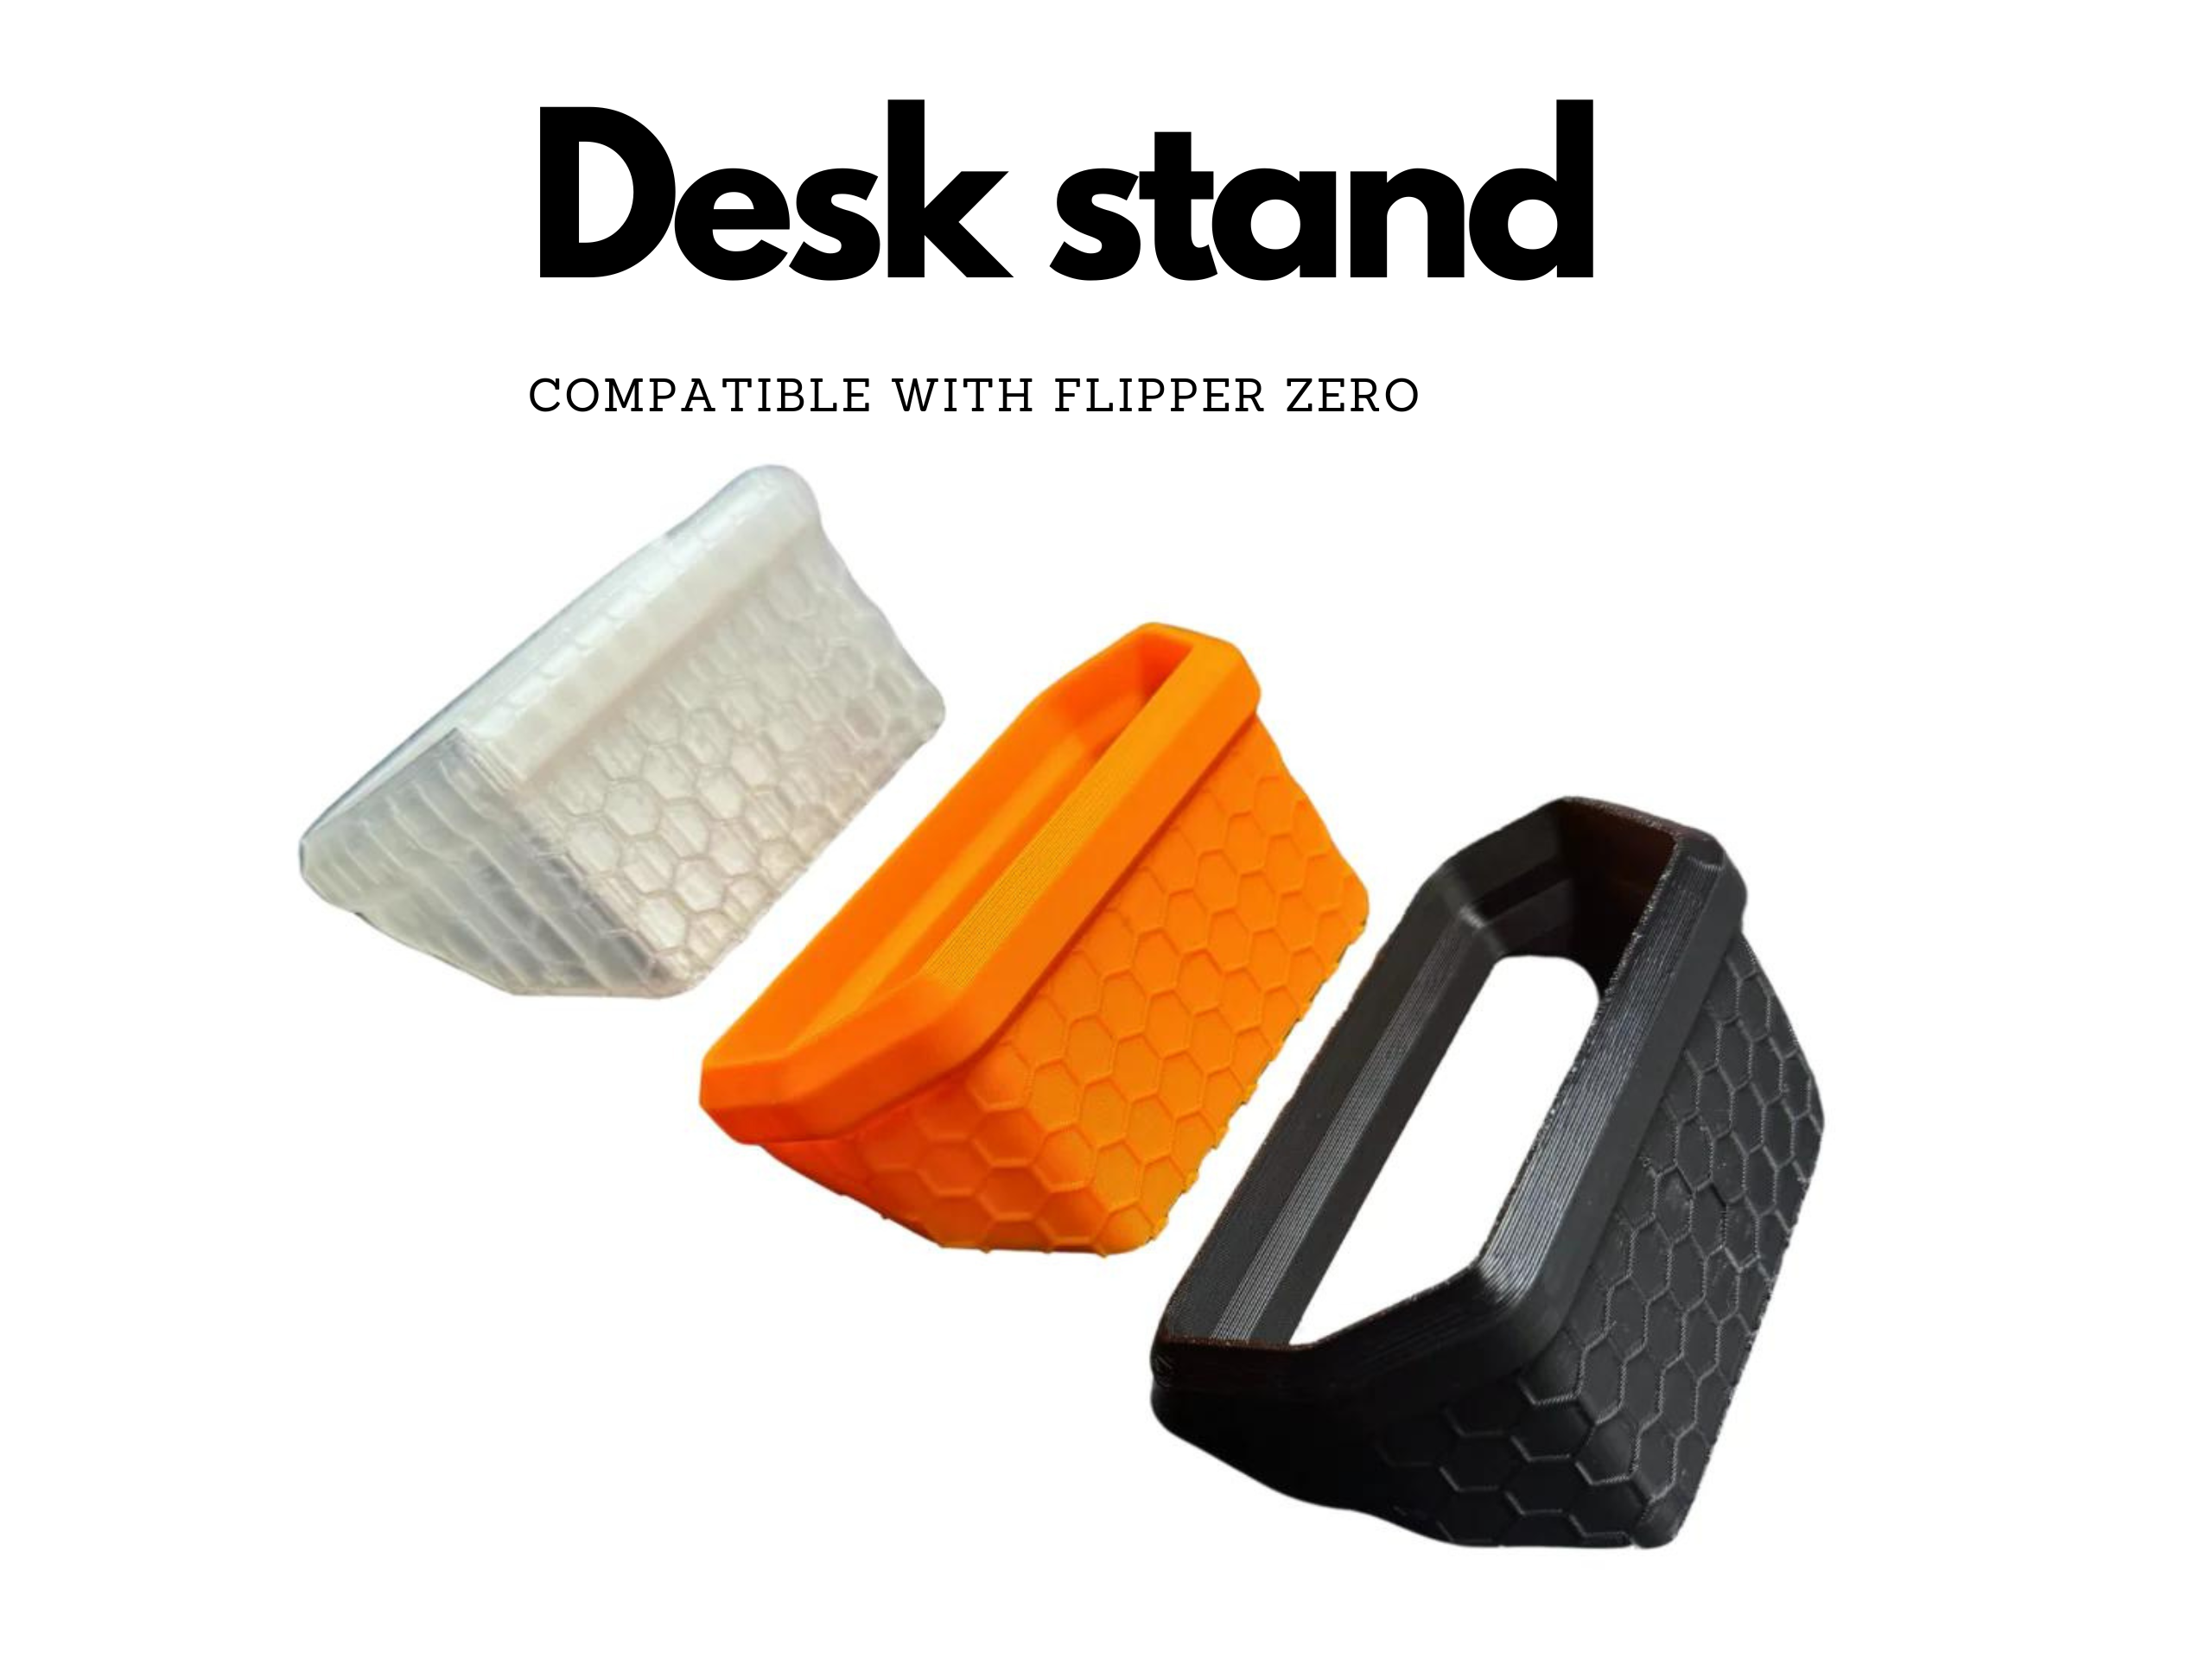 Desk stand compatible with Flipper Zero